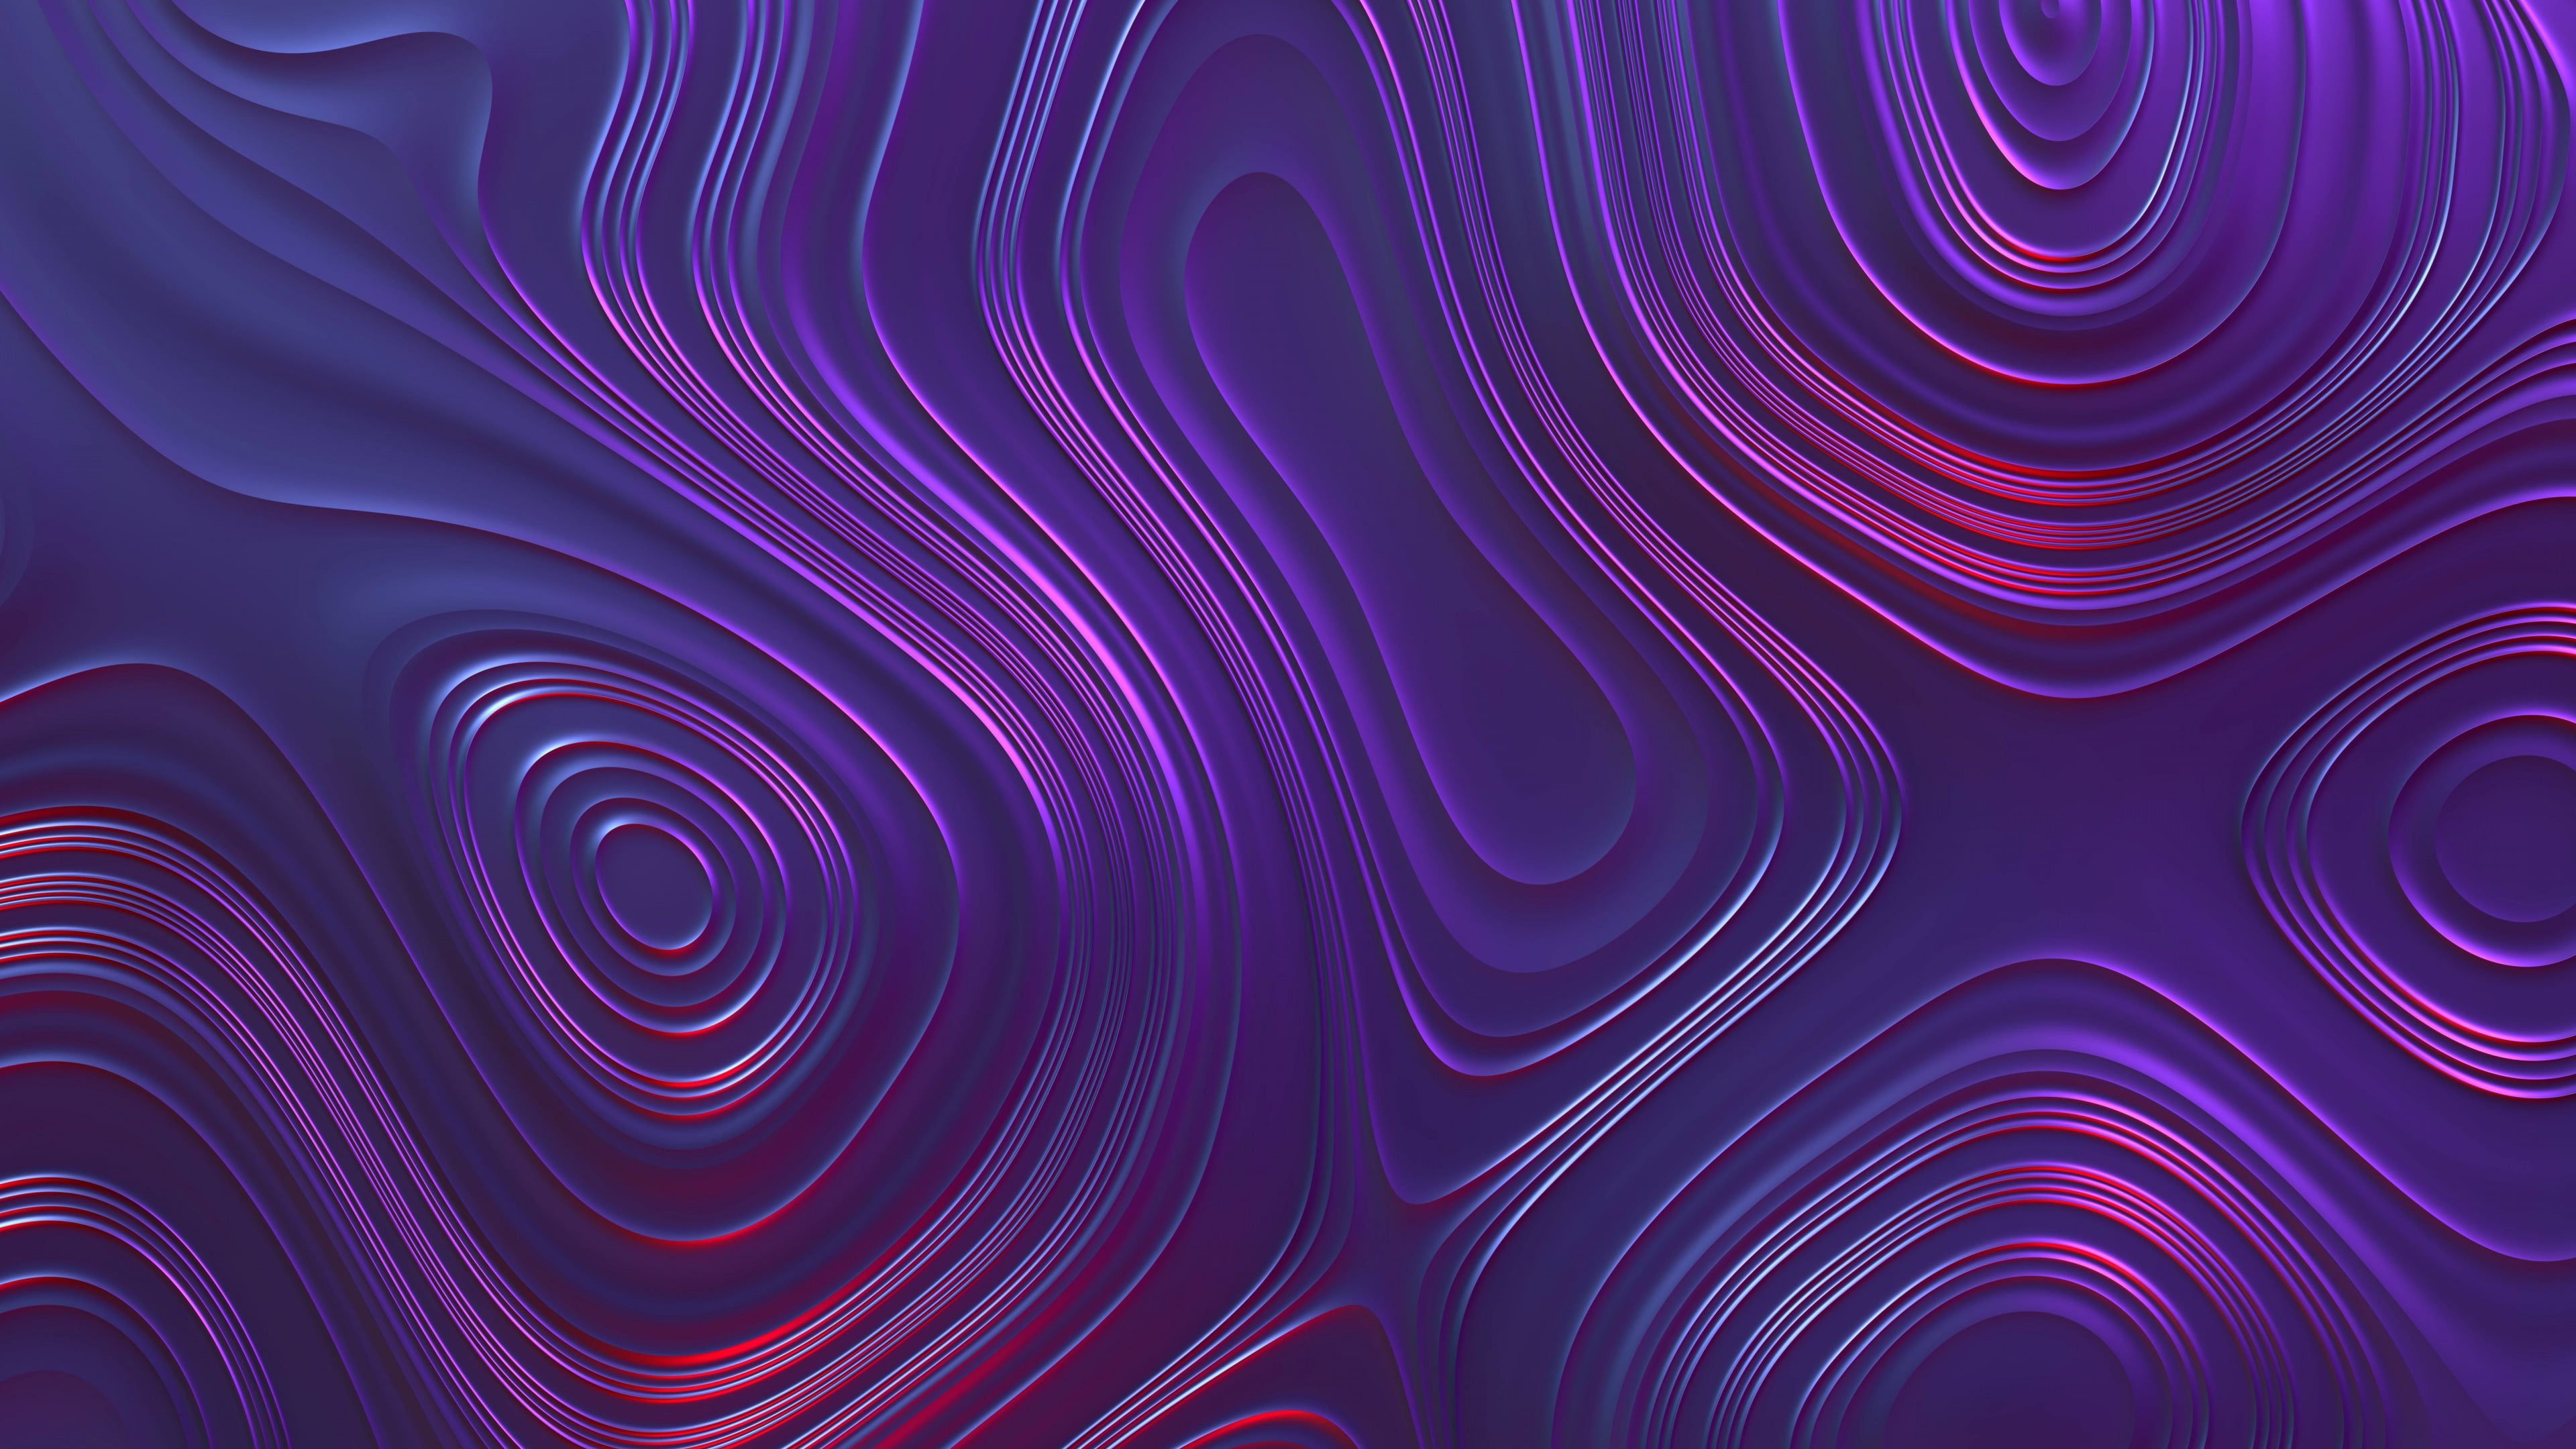 Cool Abstract Swirls Shape Art Wallpapers